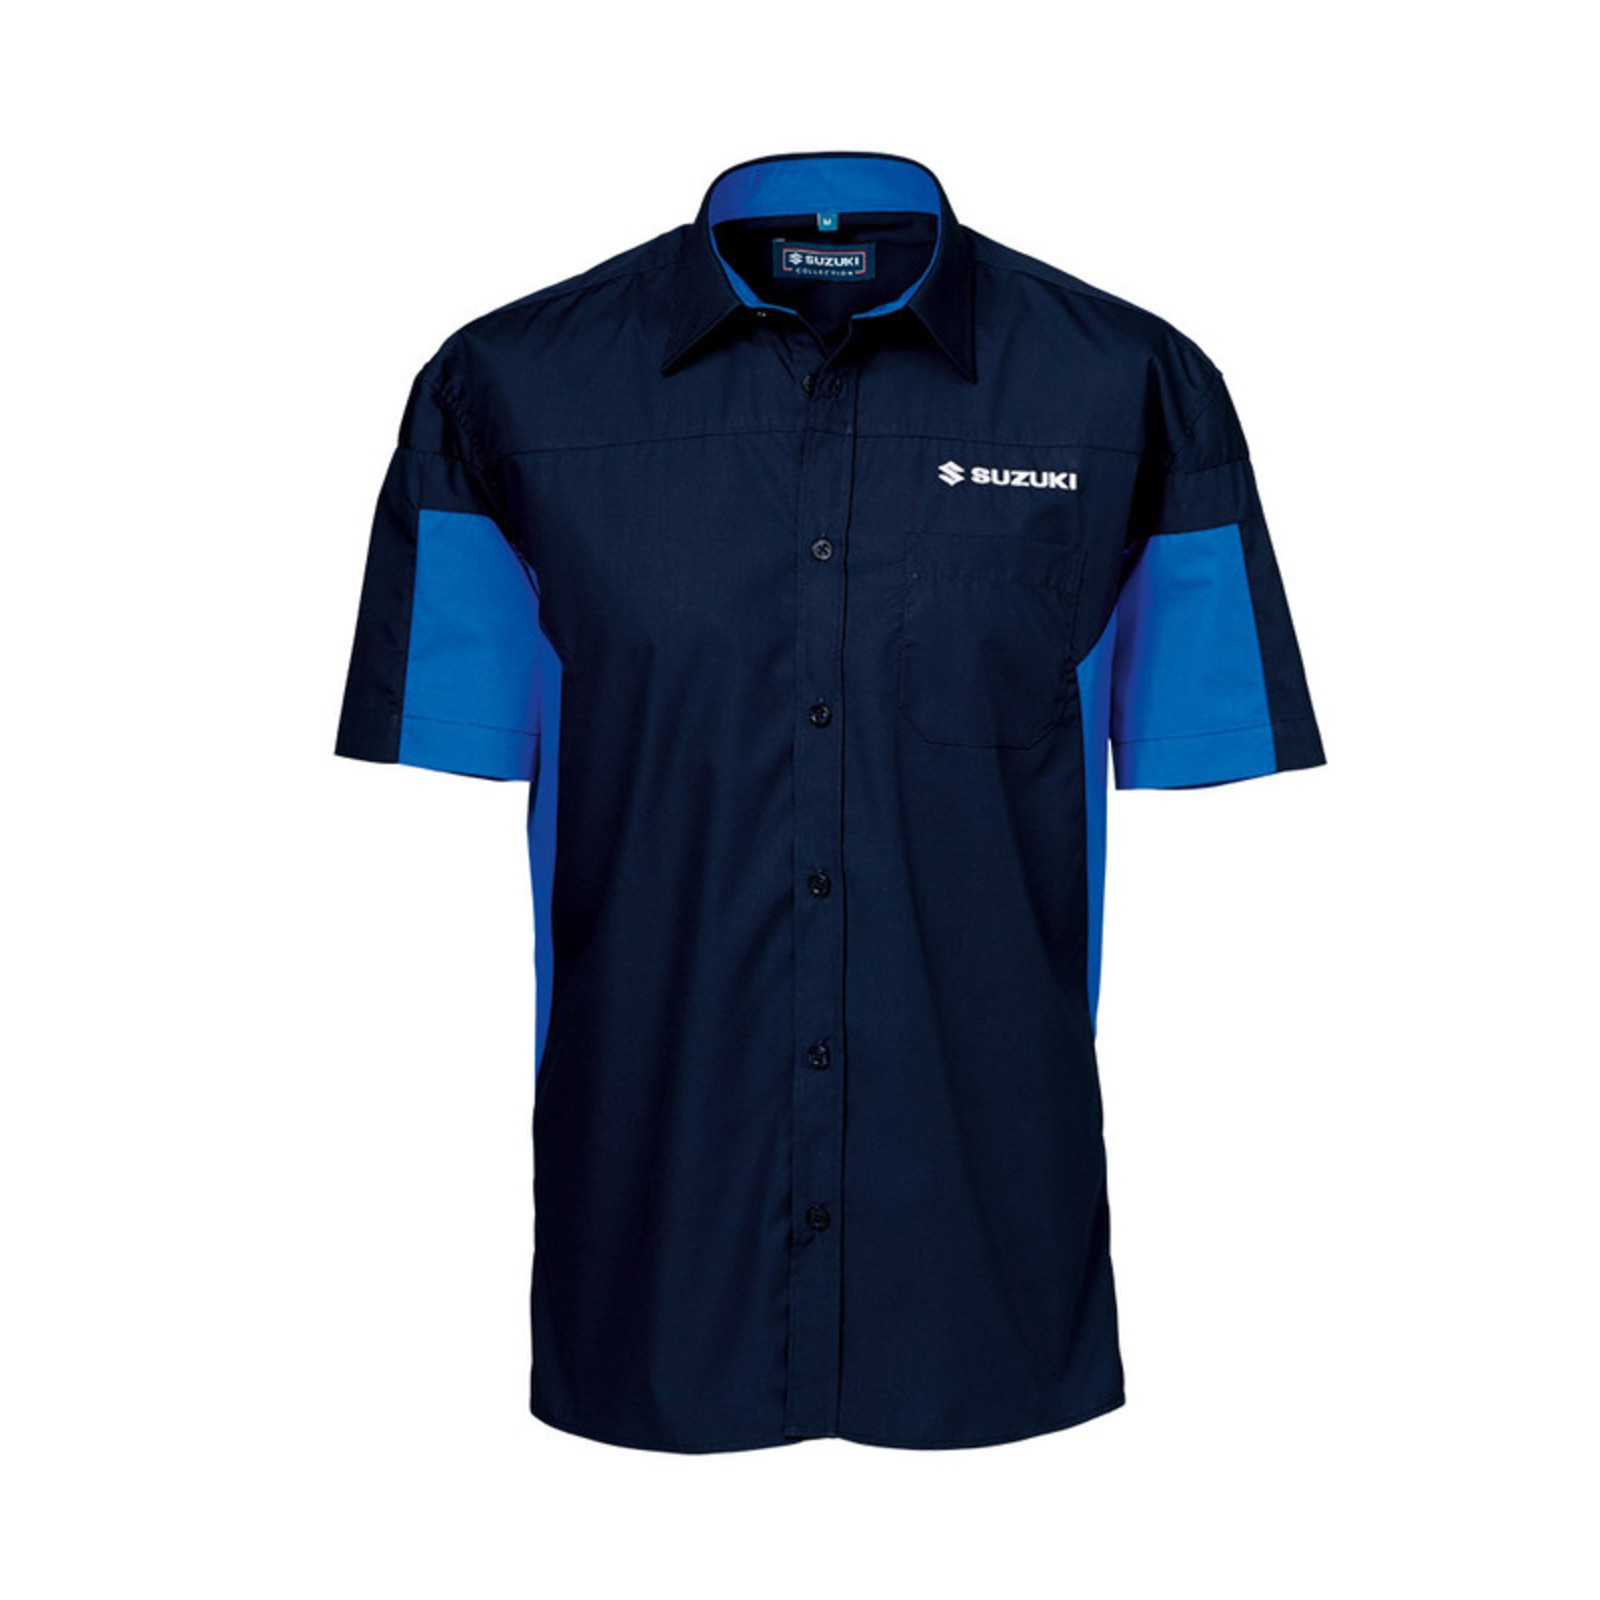 Gr Teamhemd M blau Hemd bestickt SUZUKI GSX R Racing Teambekleidung 